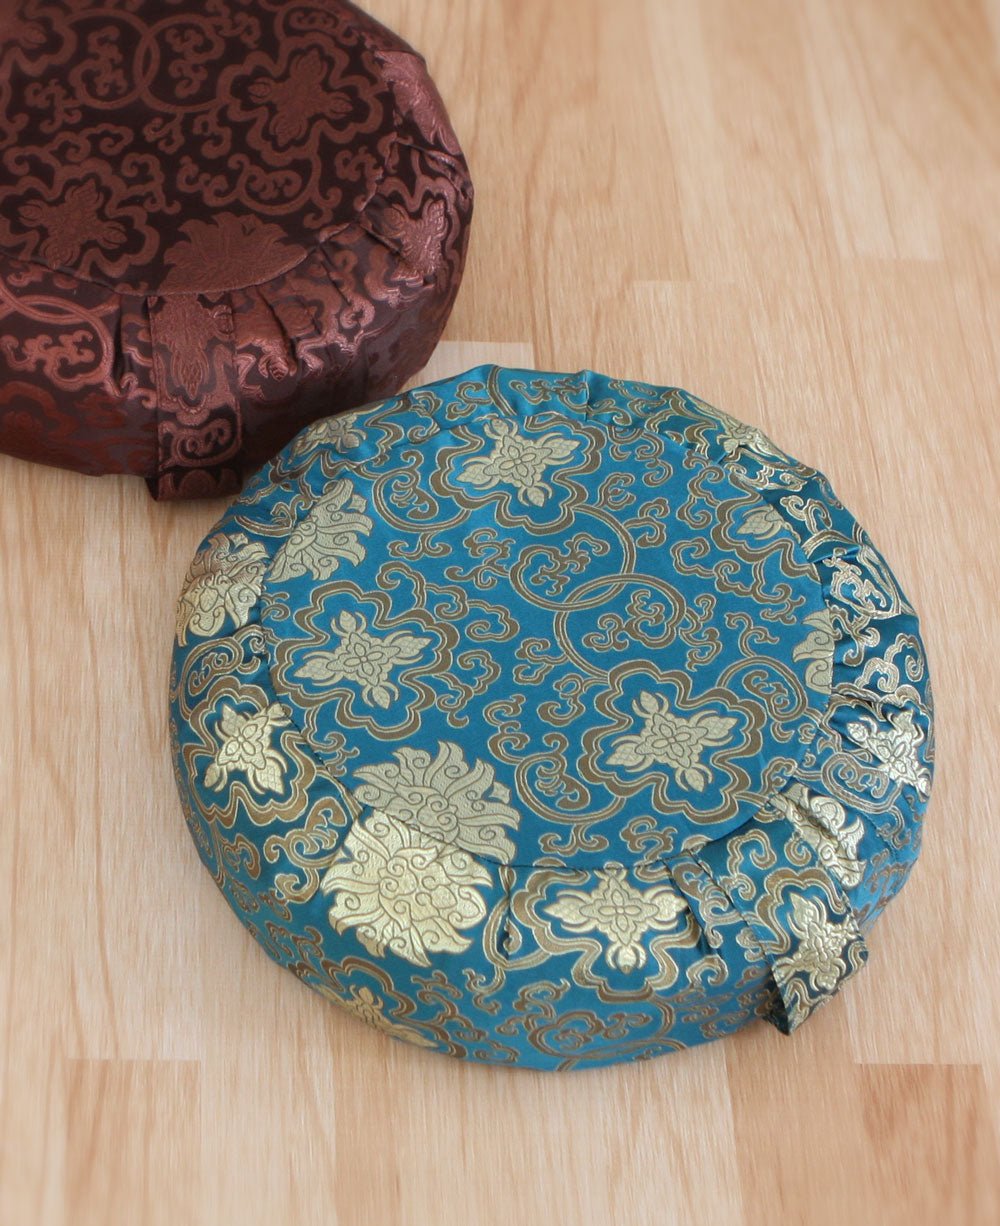 Brocade Zafu Cushion in Regal Jewel Tones - Massage Cushions Teal